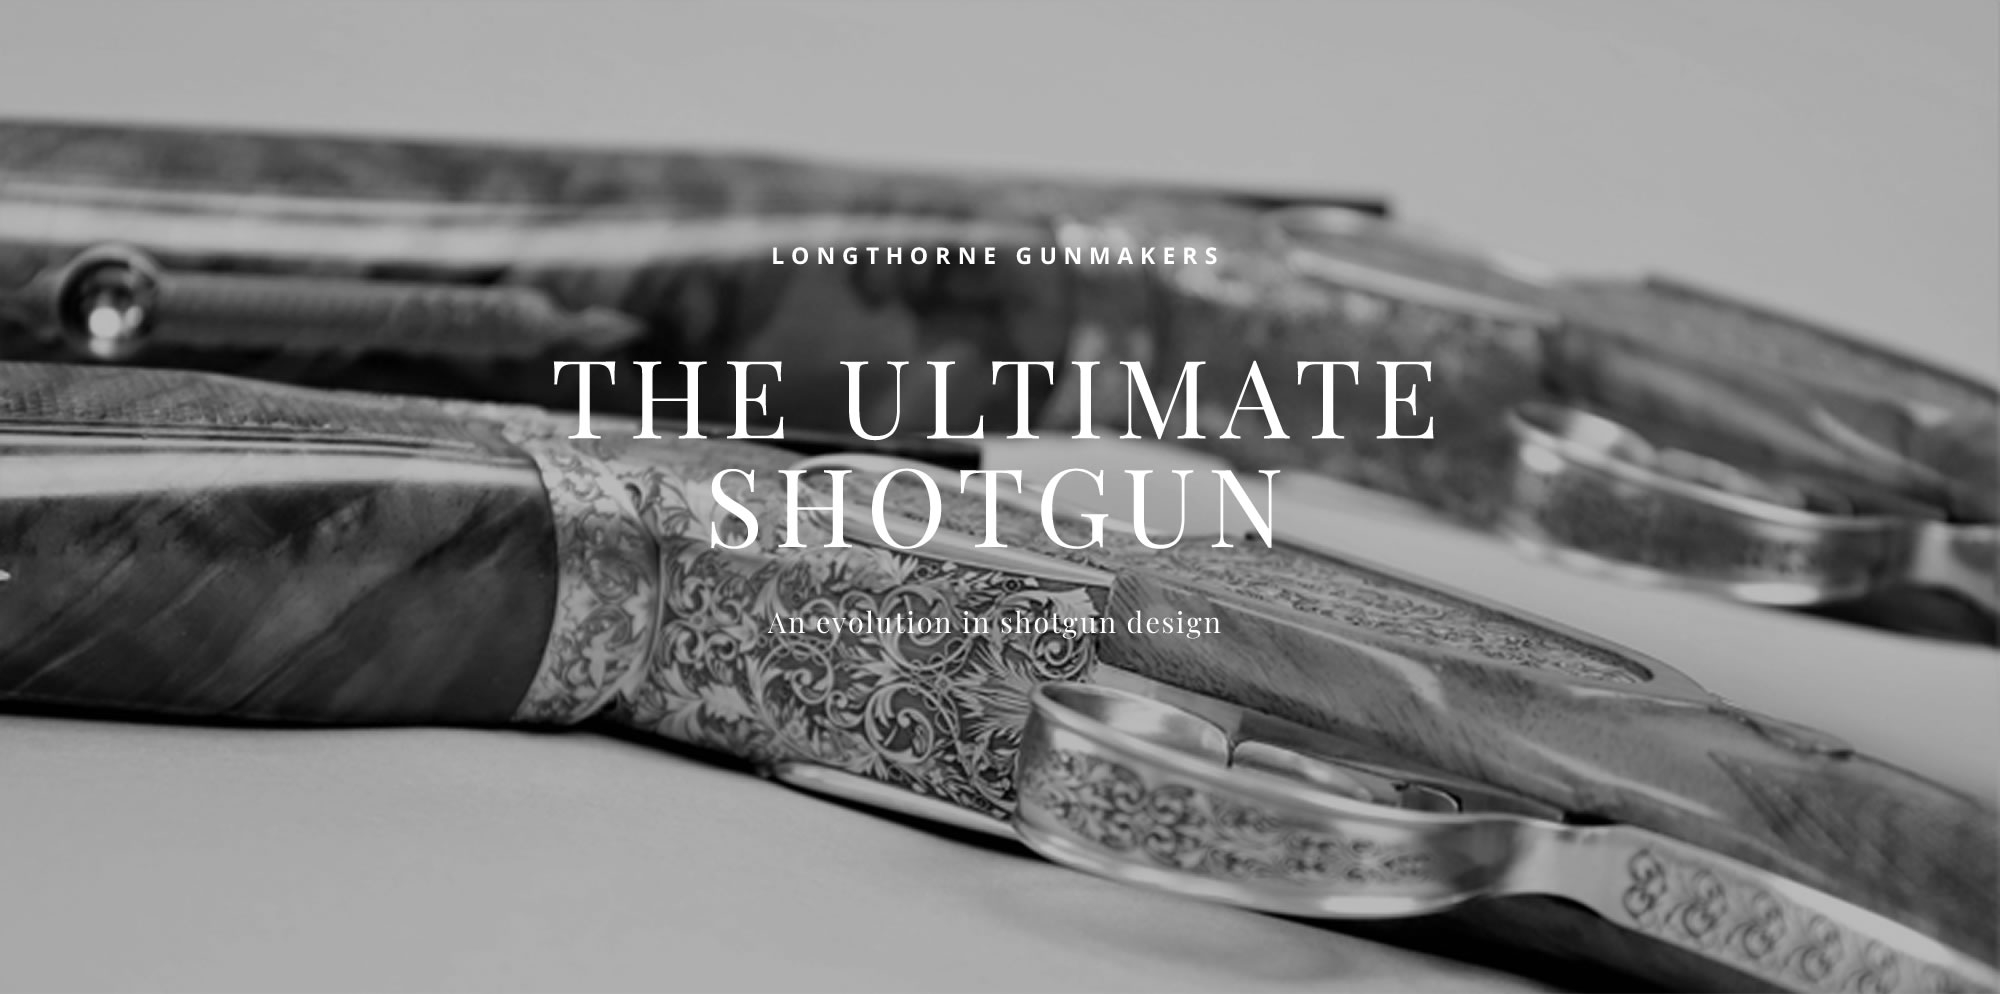 Longthorne Gunmakers - The Ultimate Shotgun. An evolution in shotgun design